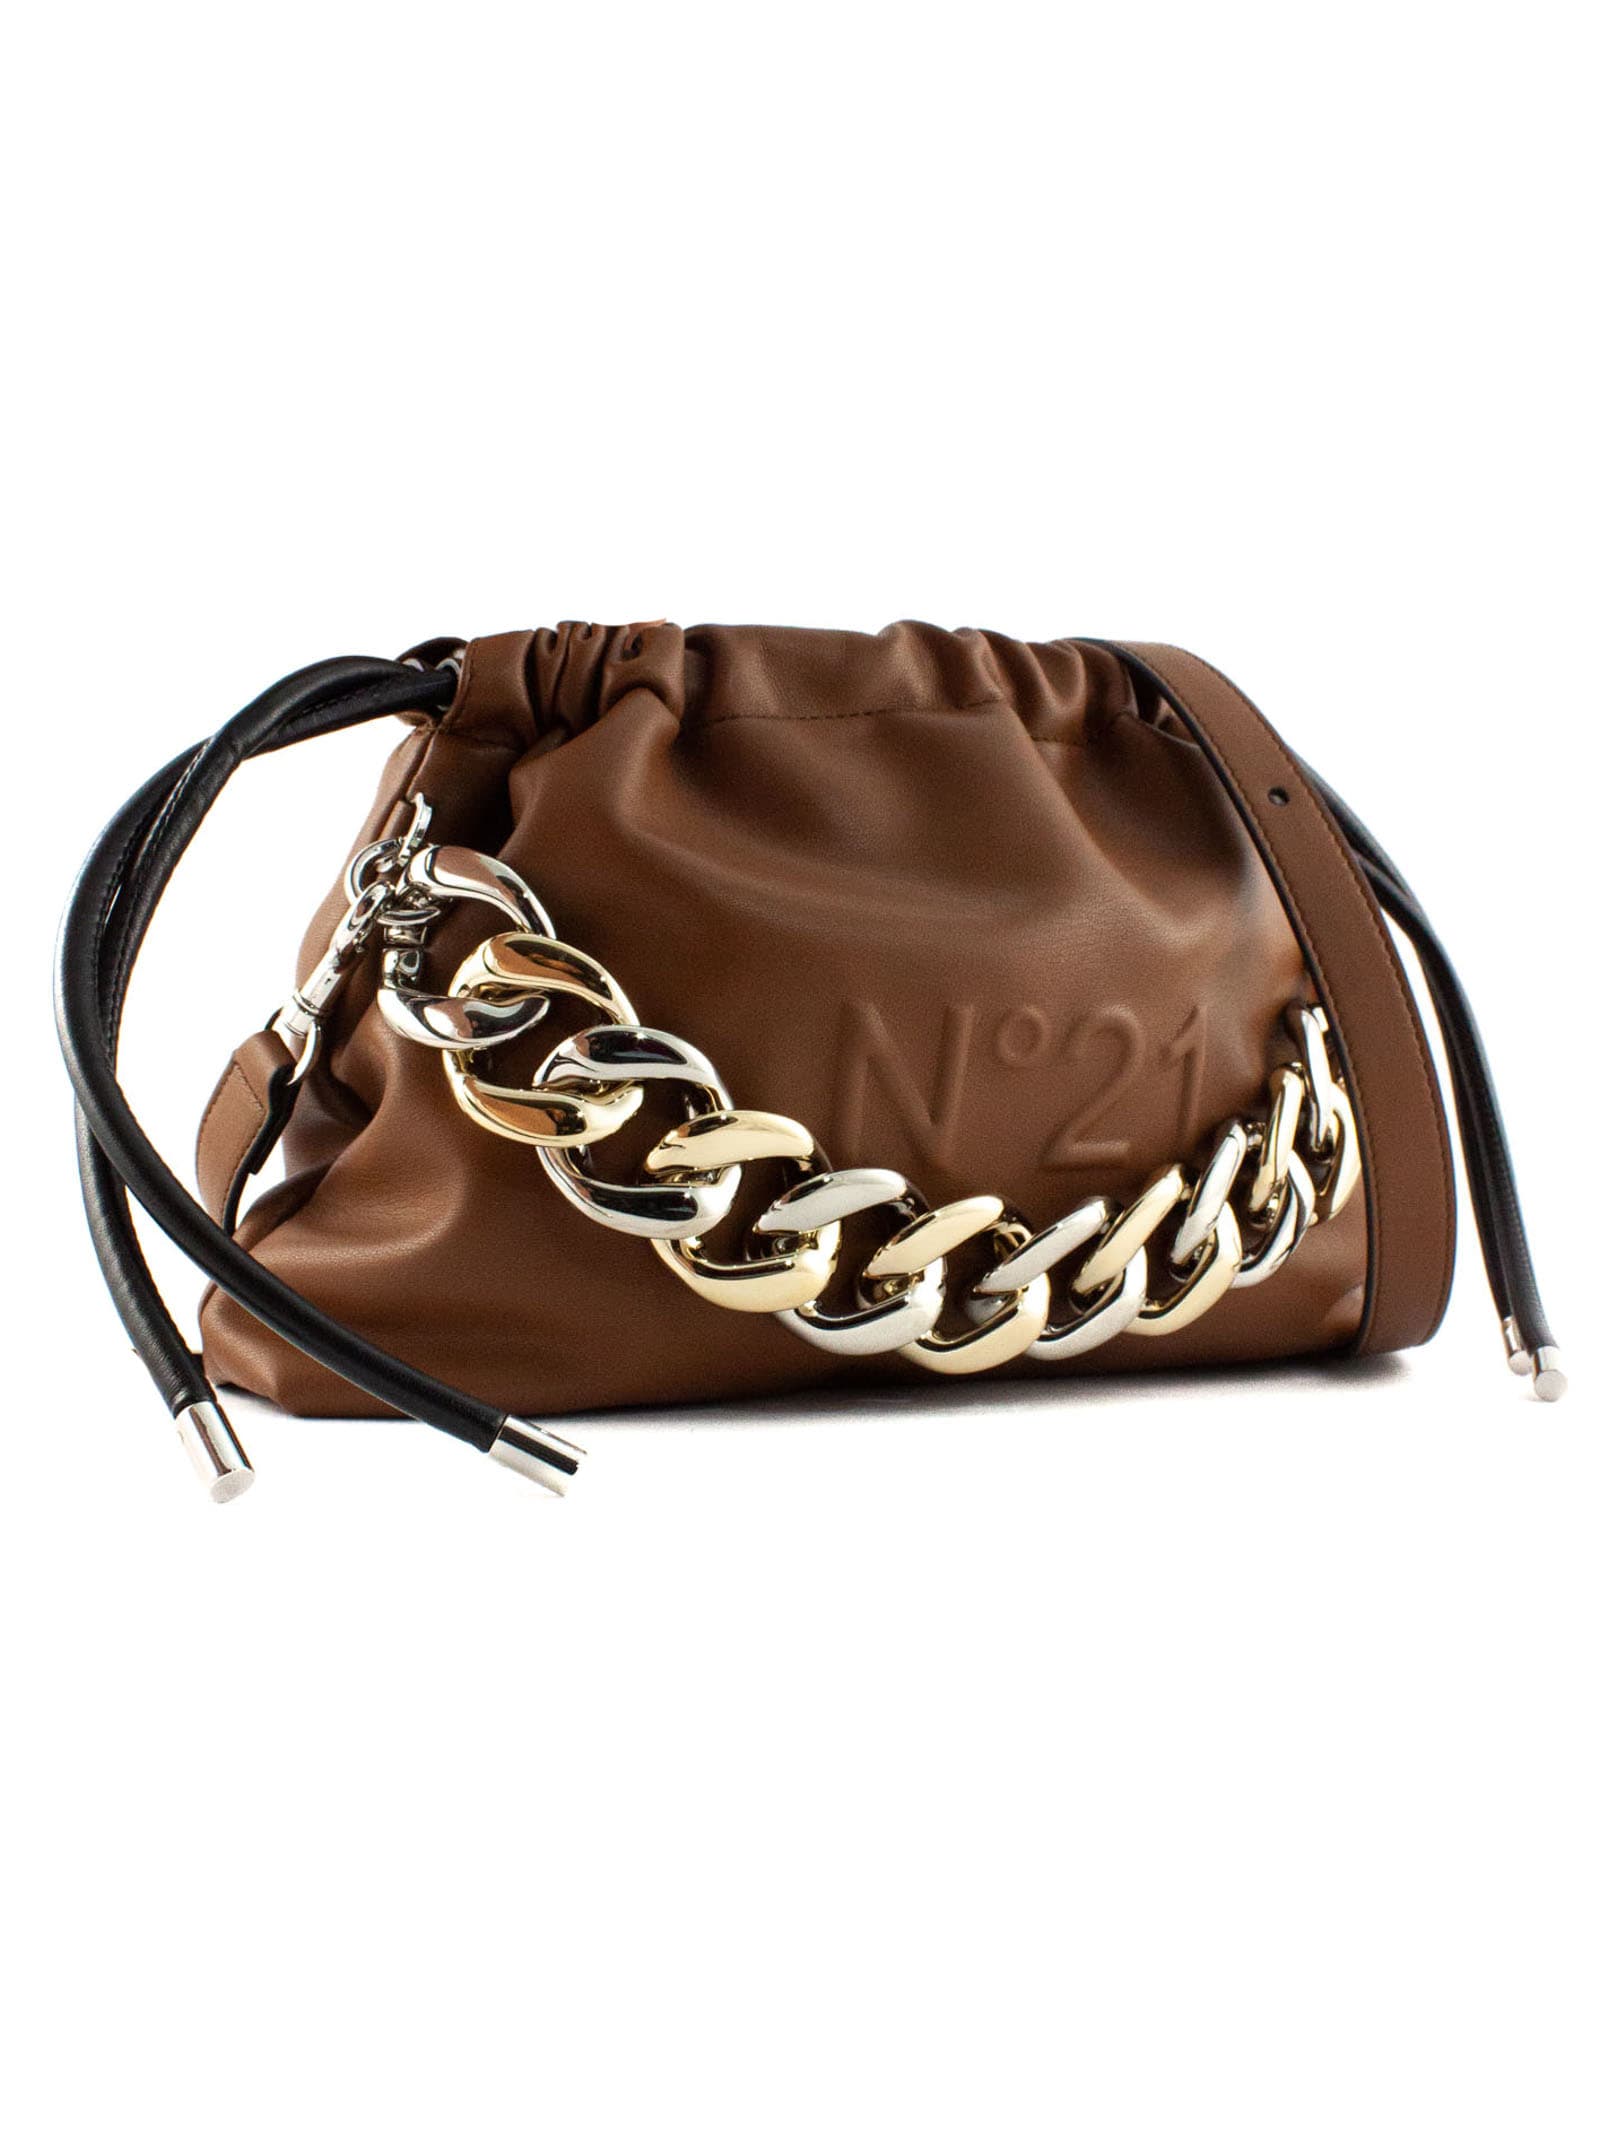 N°21 Women's Eva Crossbody Bag